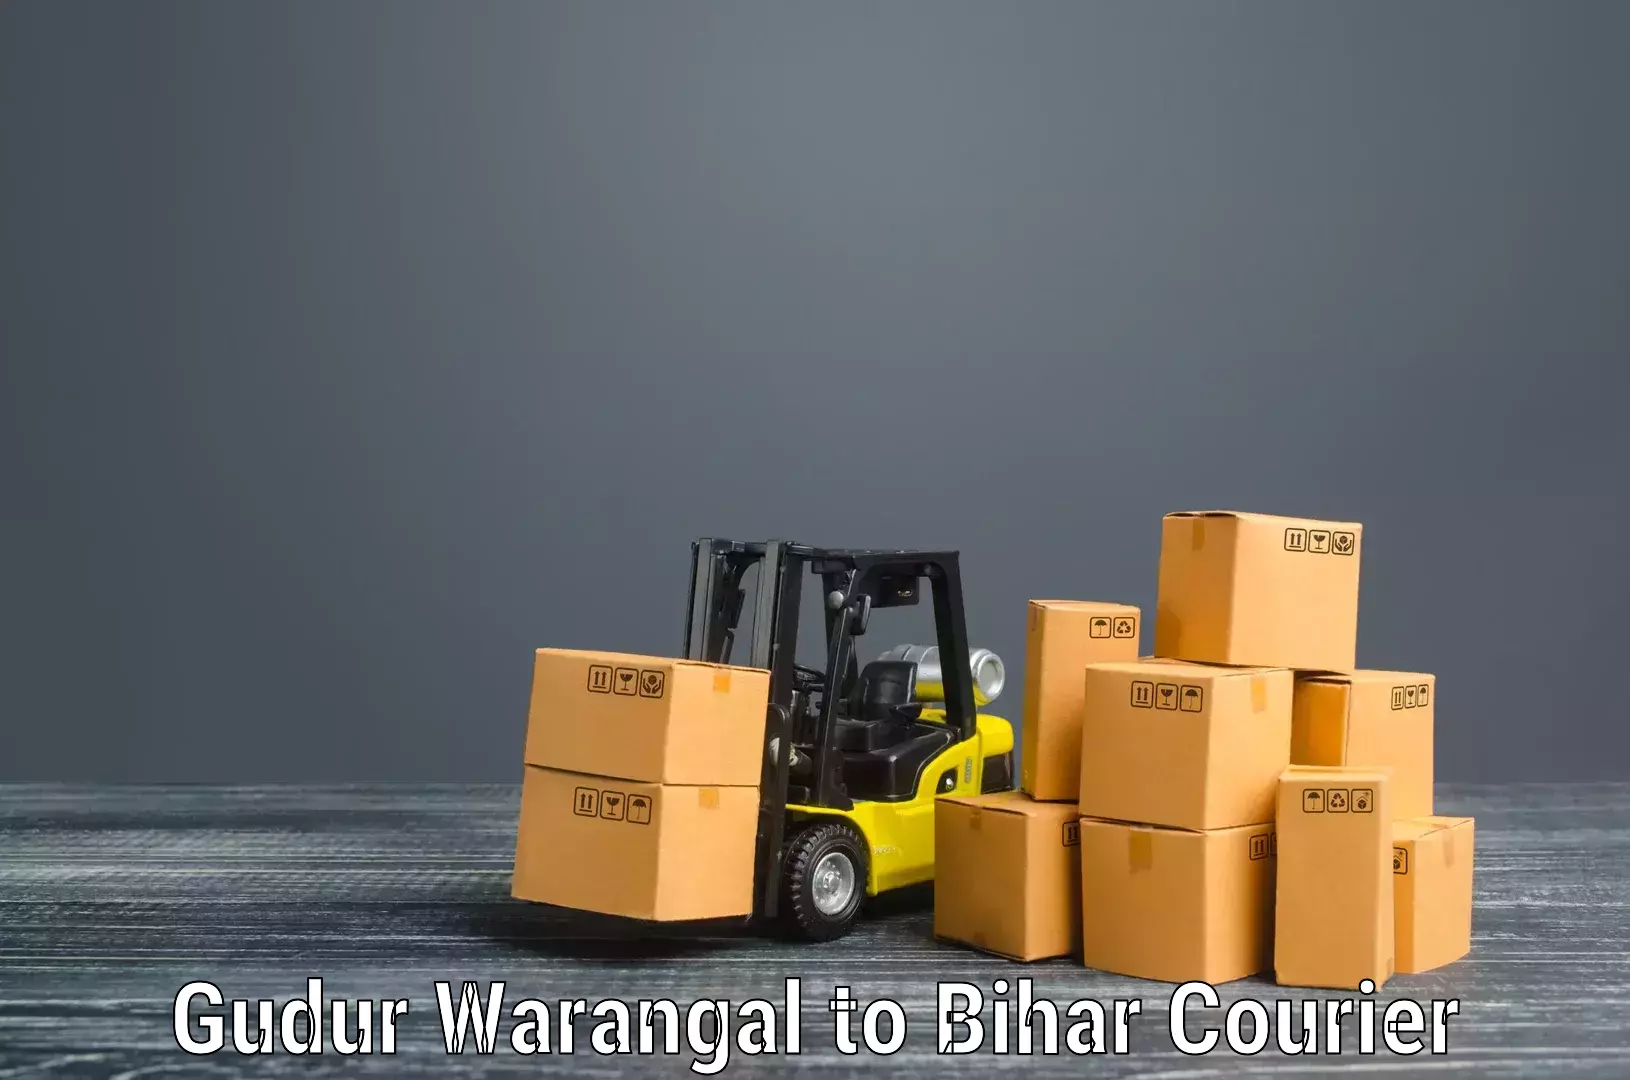 Furniture transport specialists Gudur Warangal to Bharwara